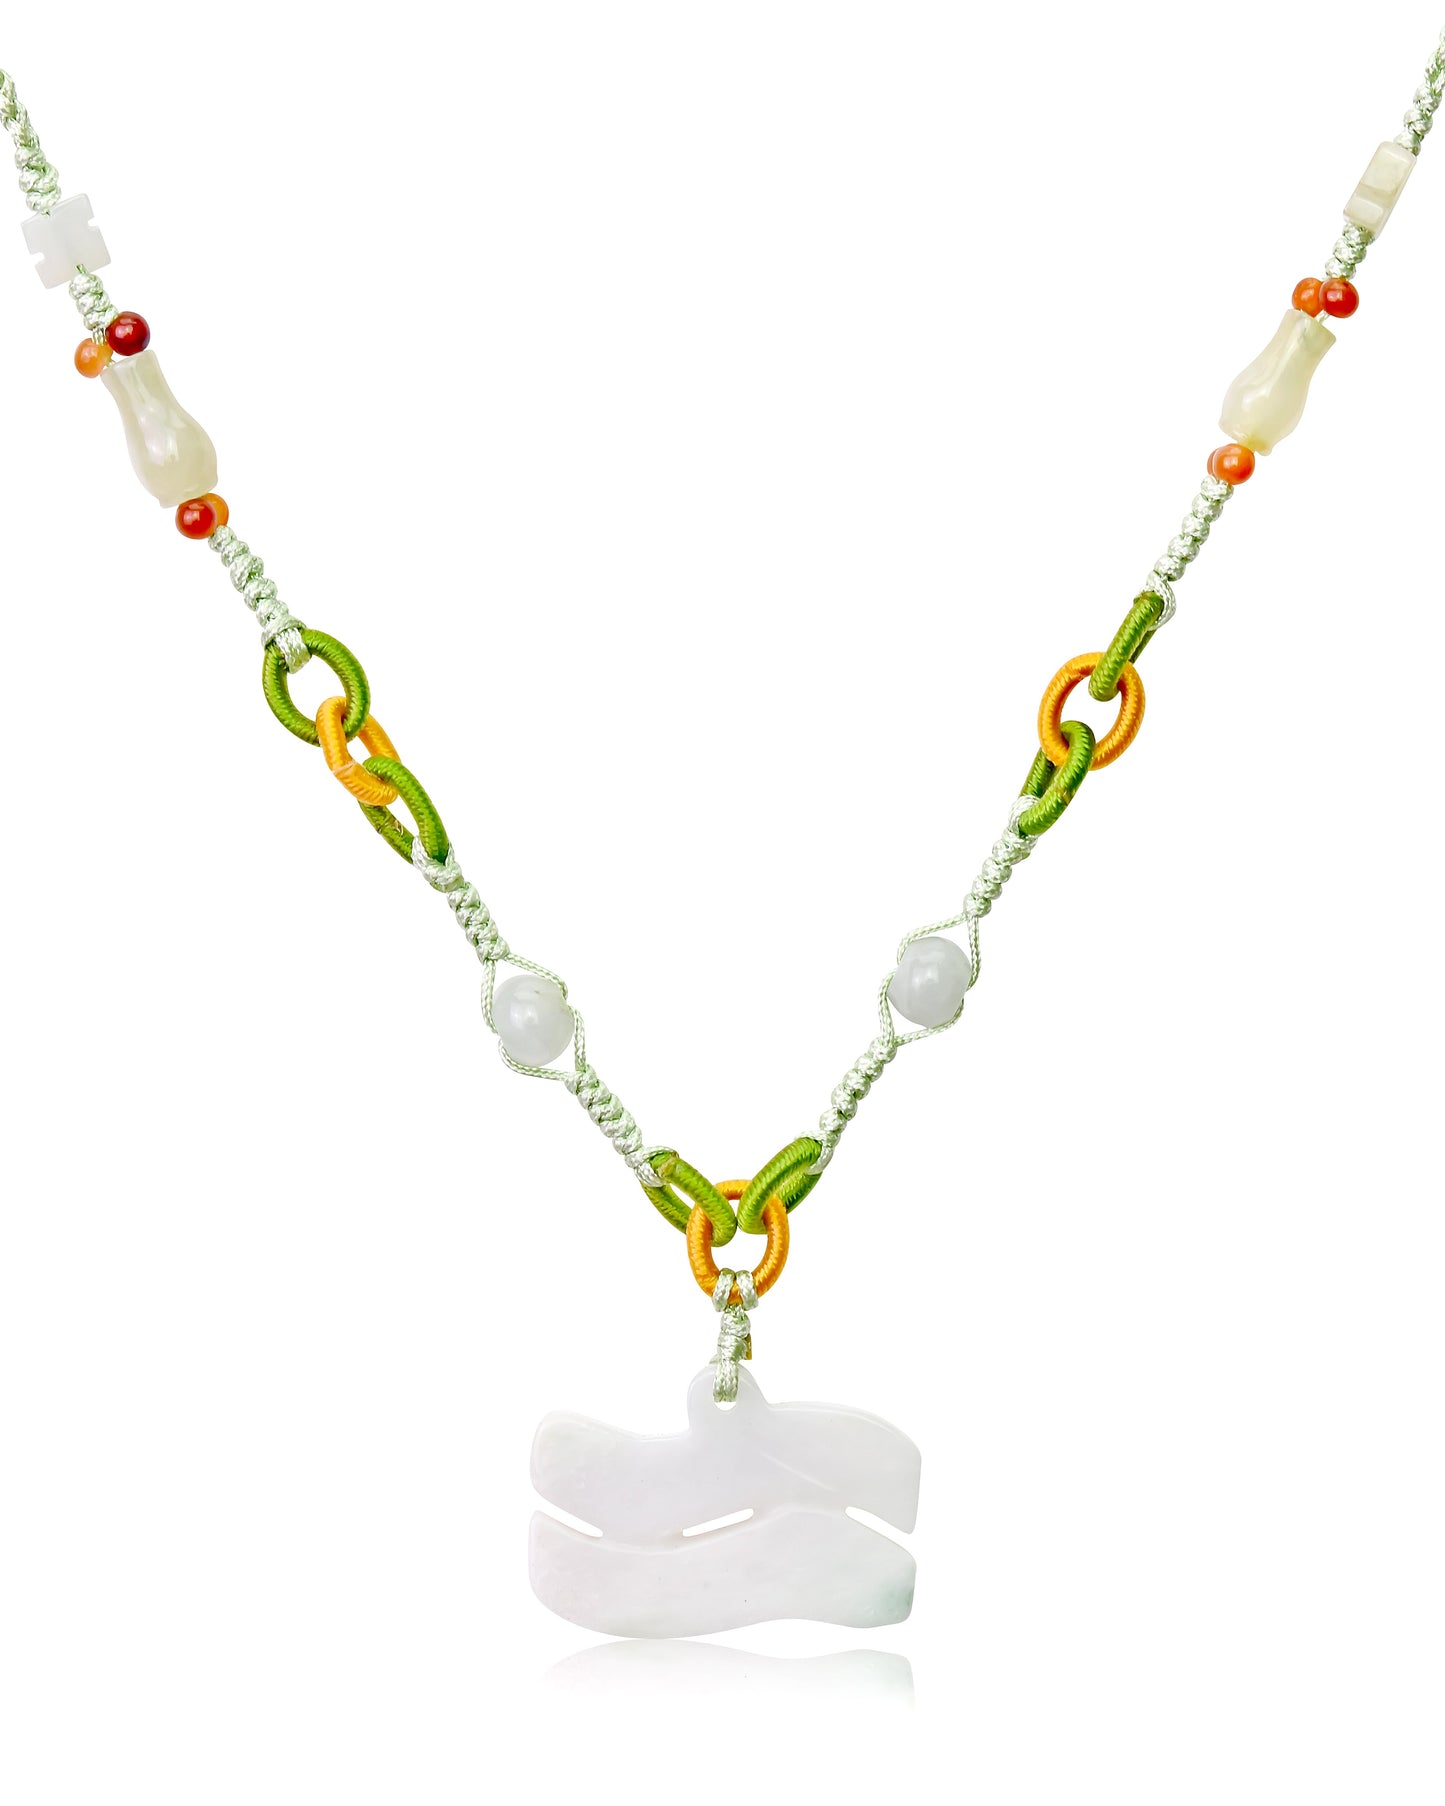 Aquarius Astrology Handmade Jade Necklace Single Pendant with Sea Green Cord